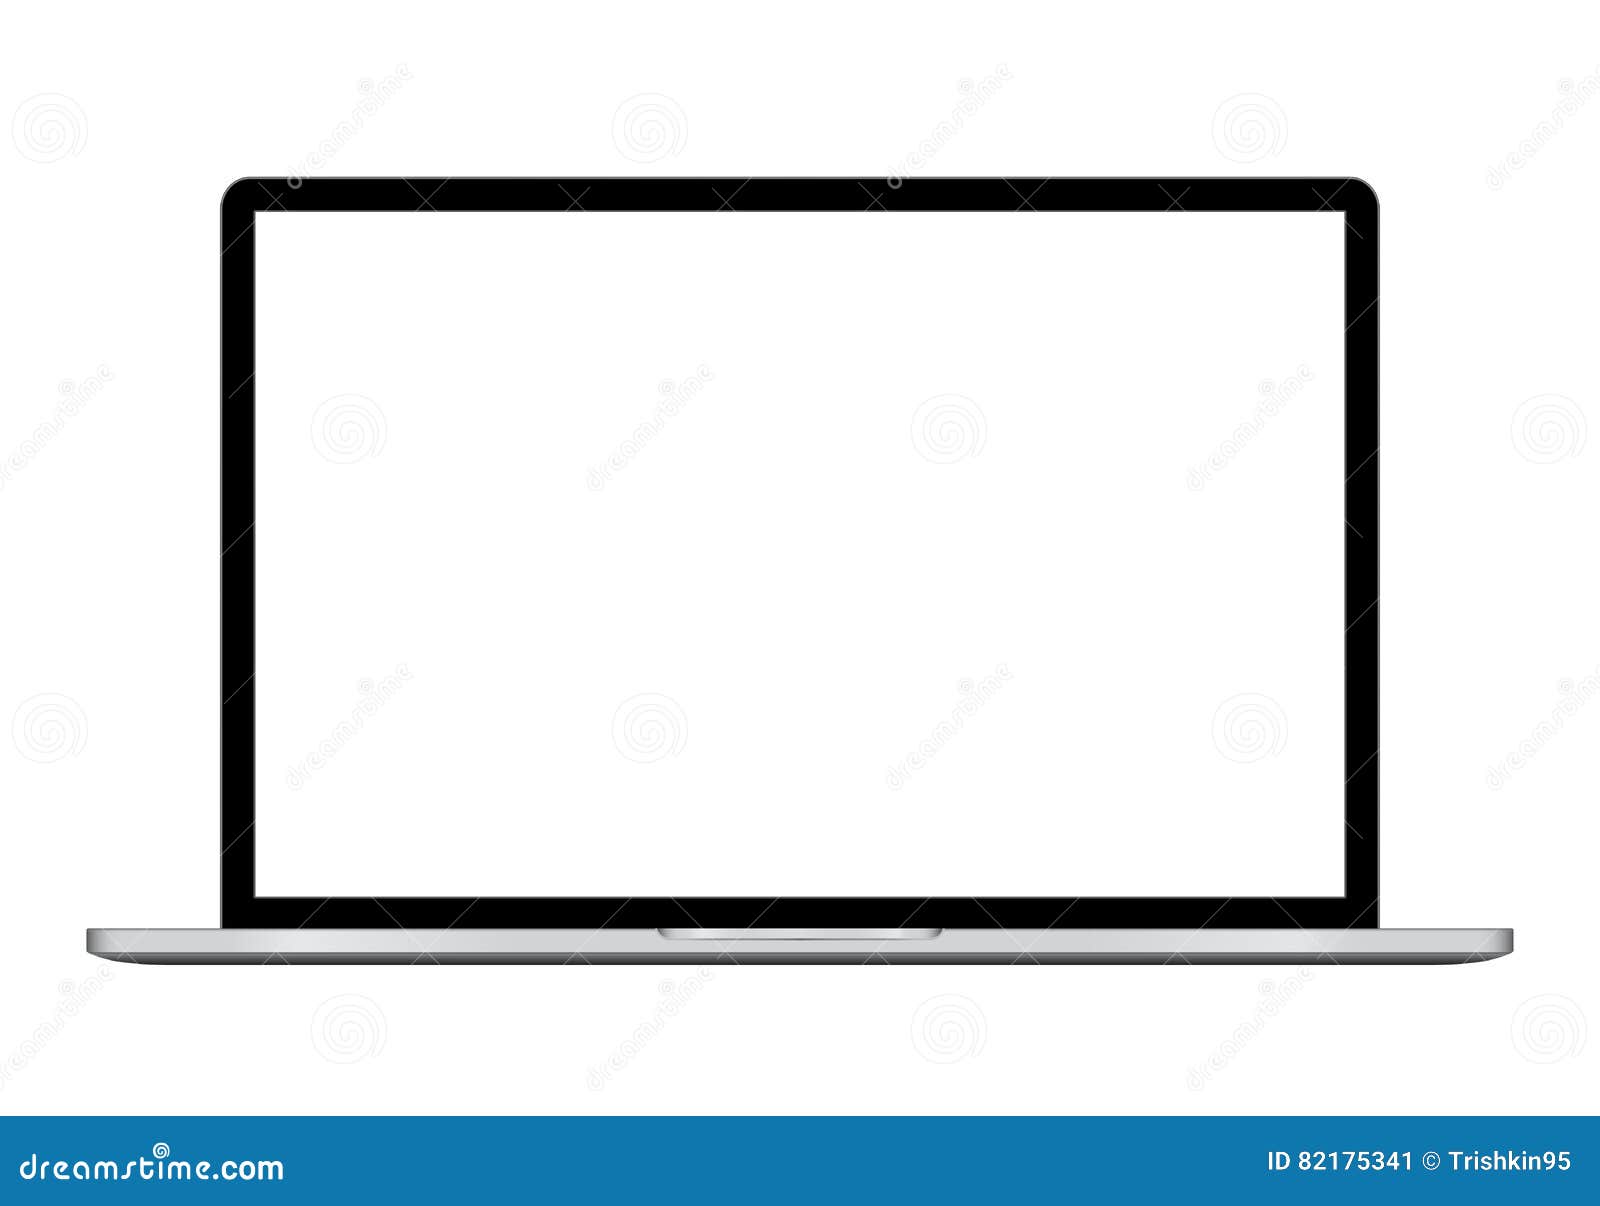 laptop  with blank screen  on white background, aluminium body. . eps10.